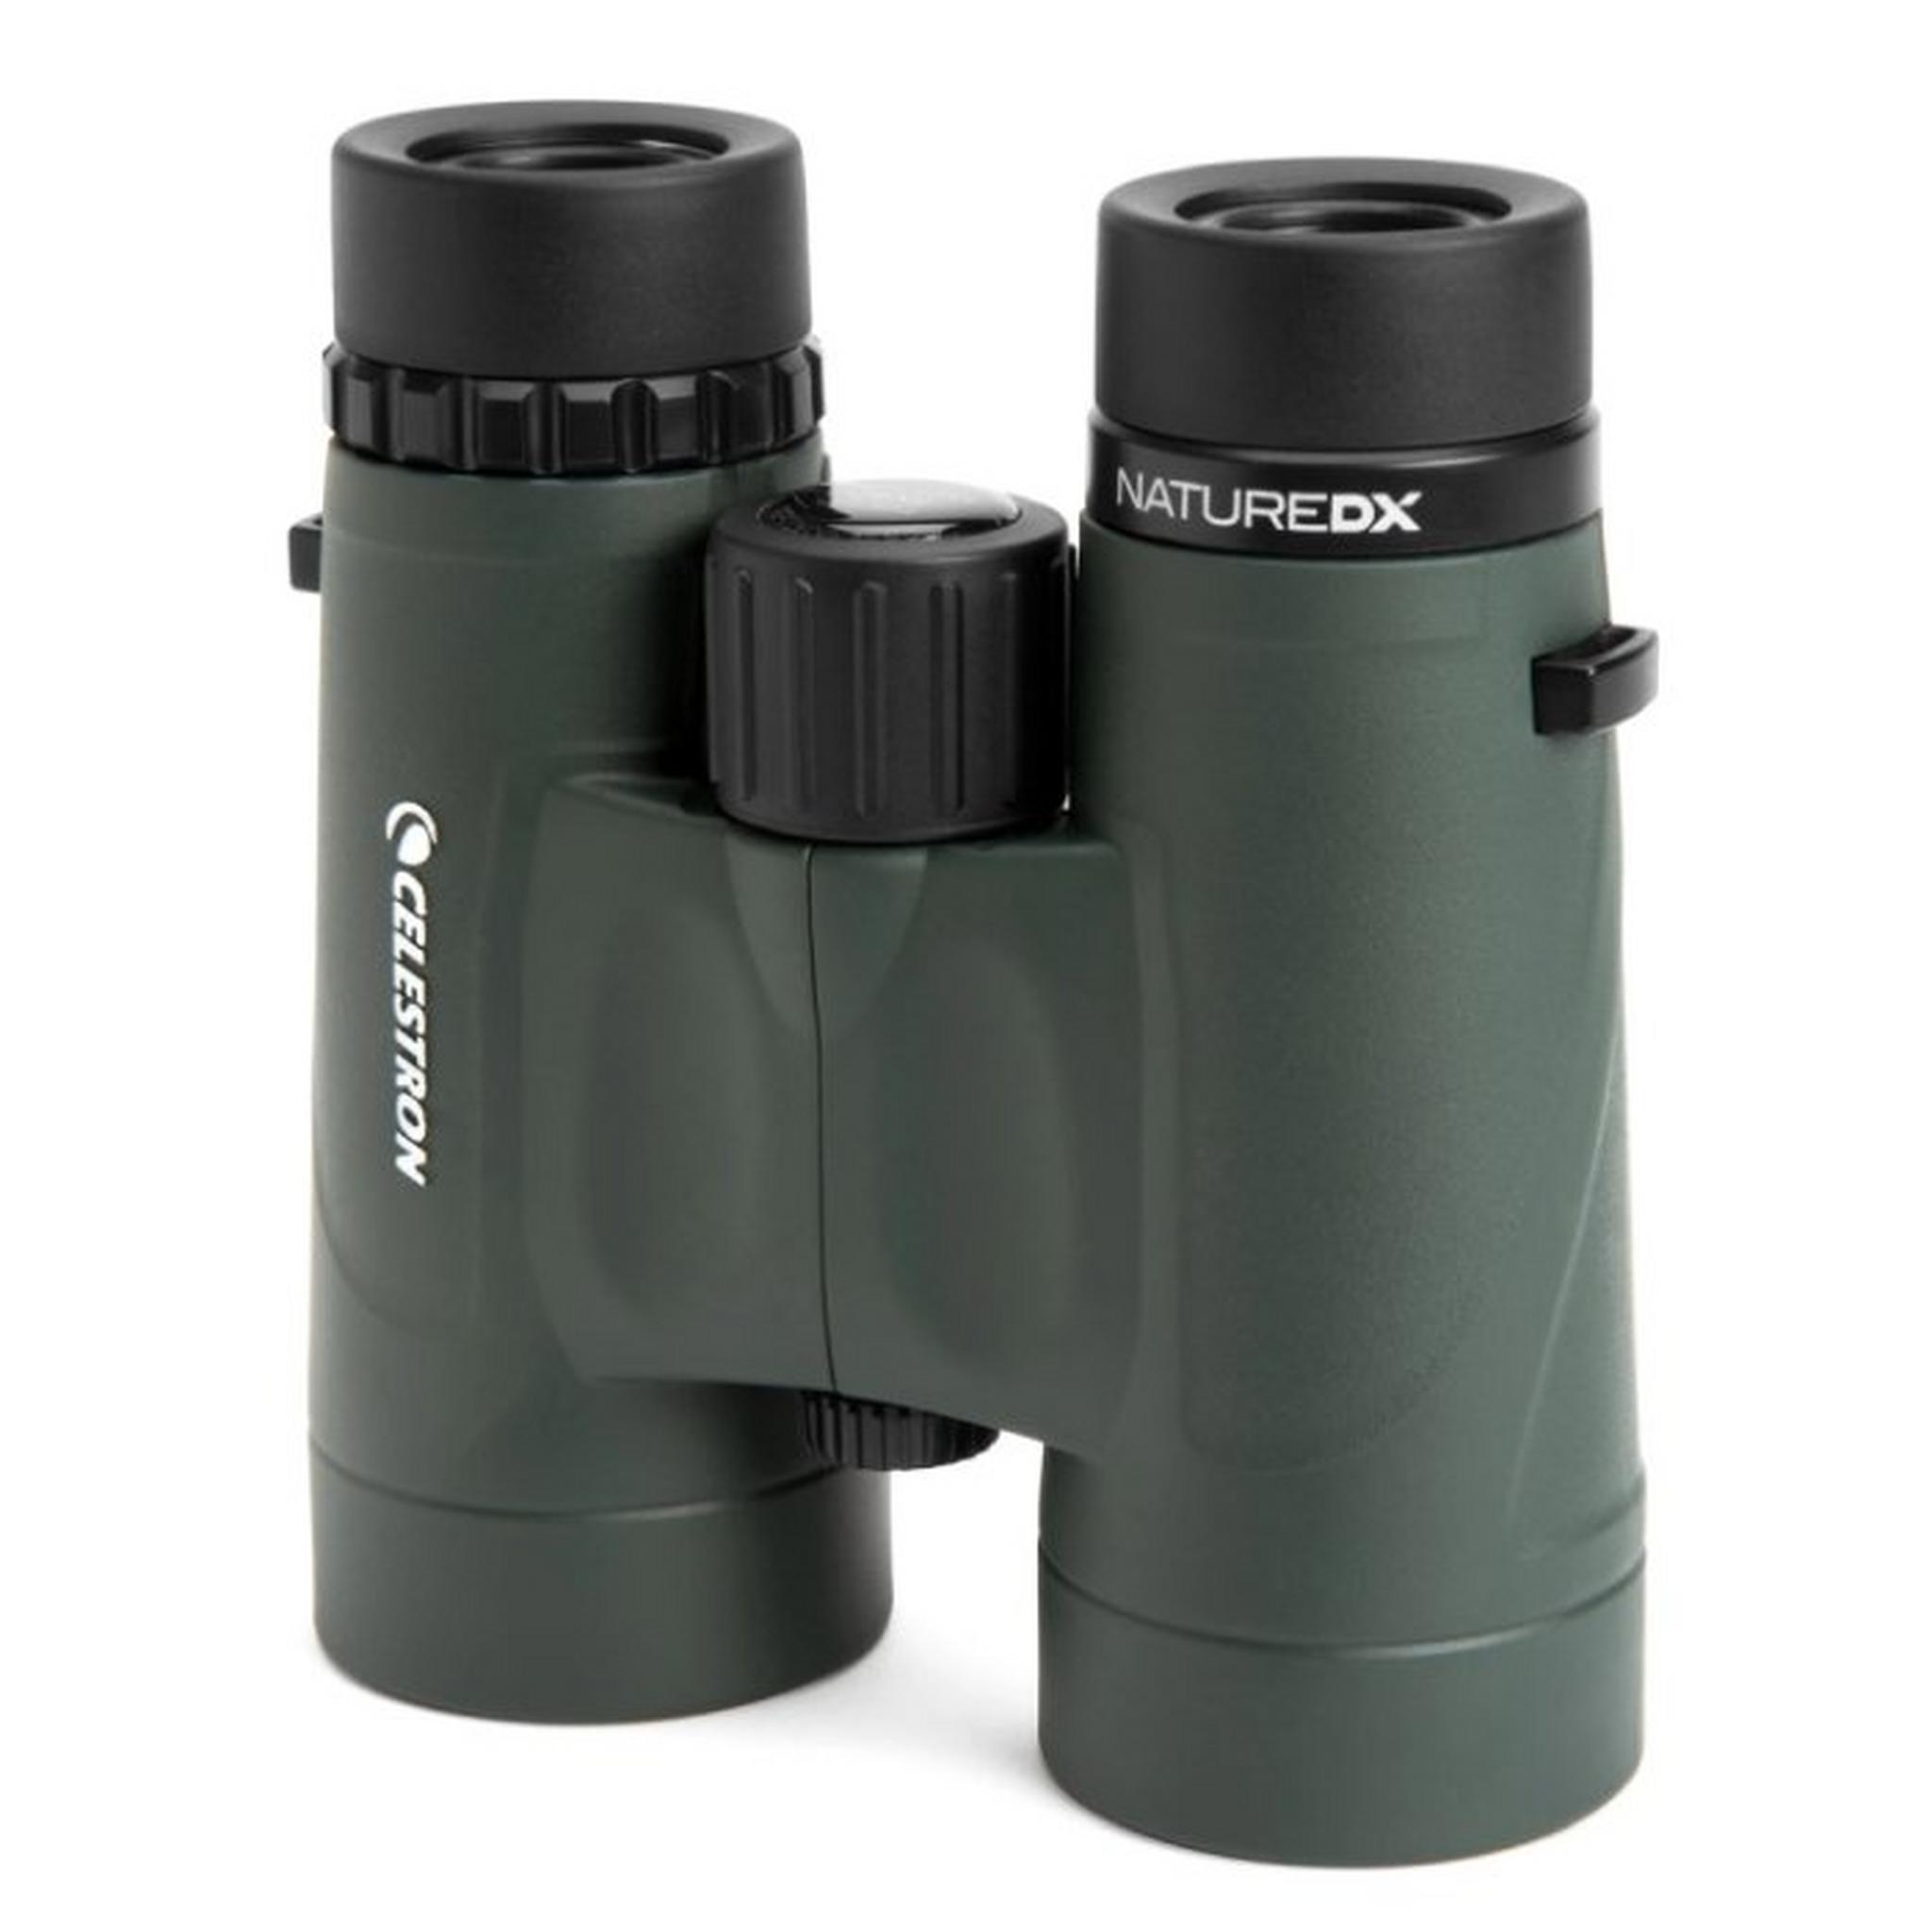 Celestron Nature DX 8X42 Binoculars